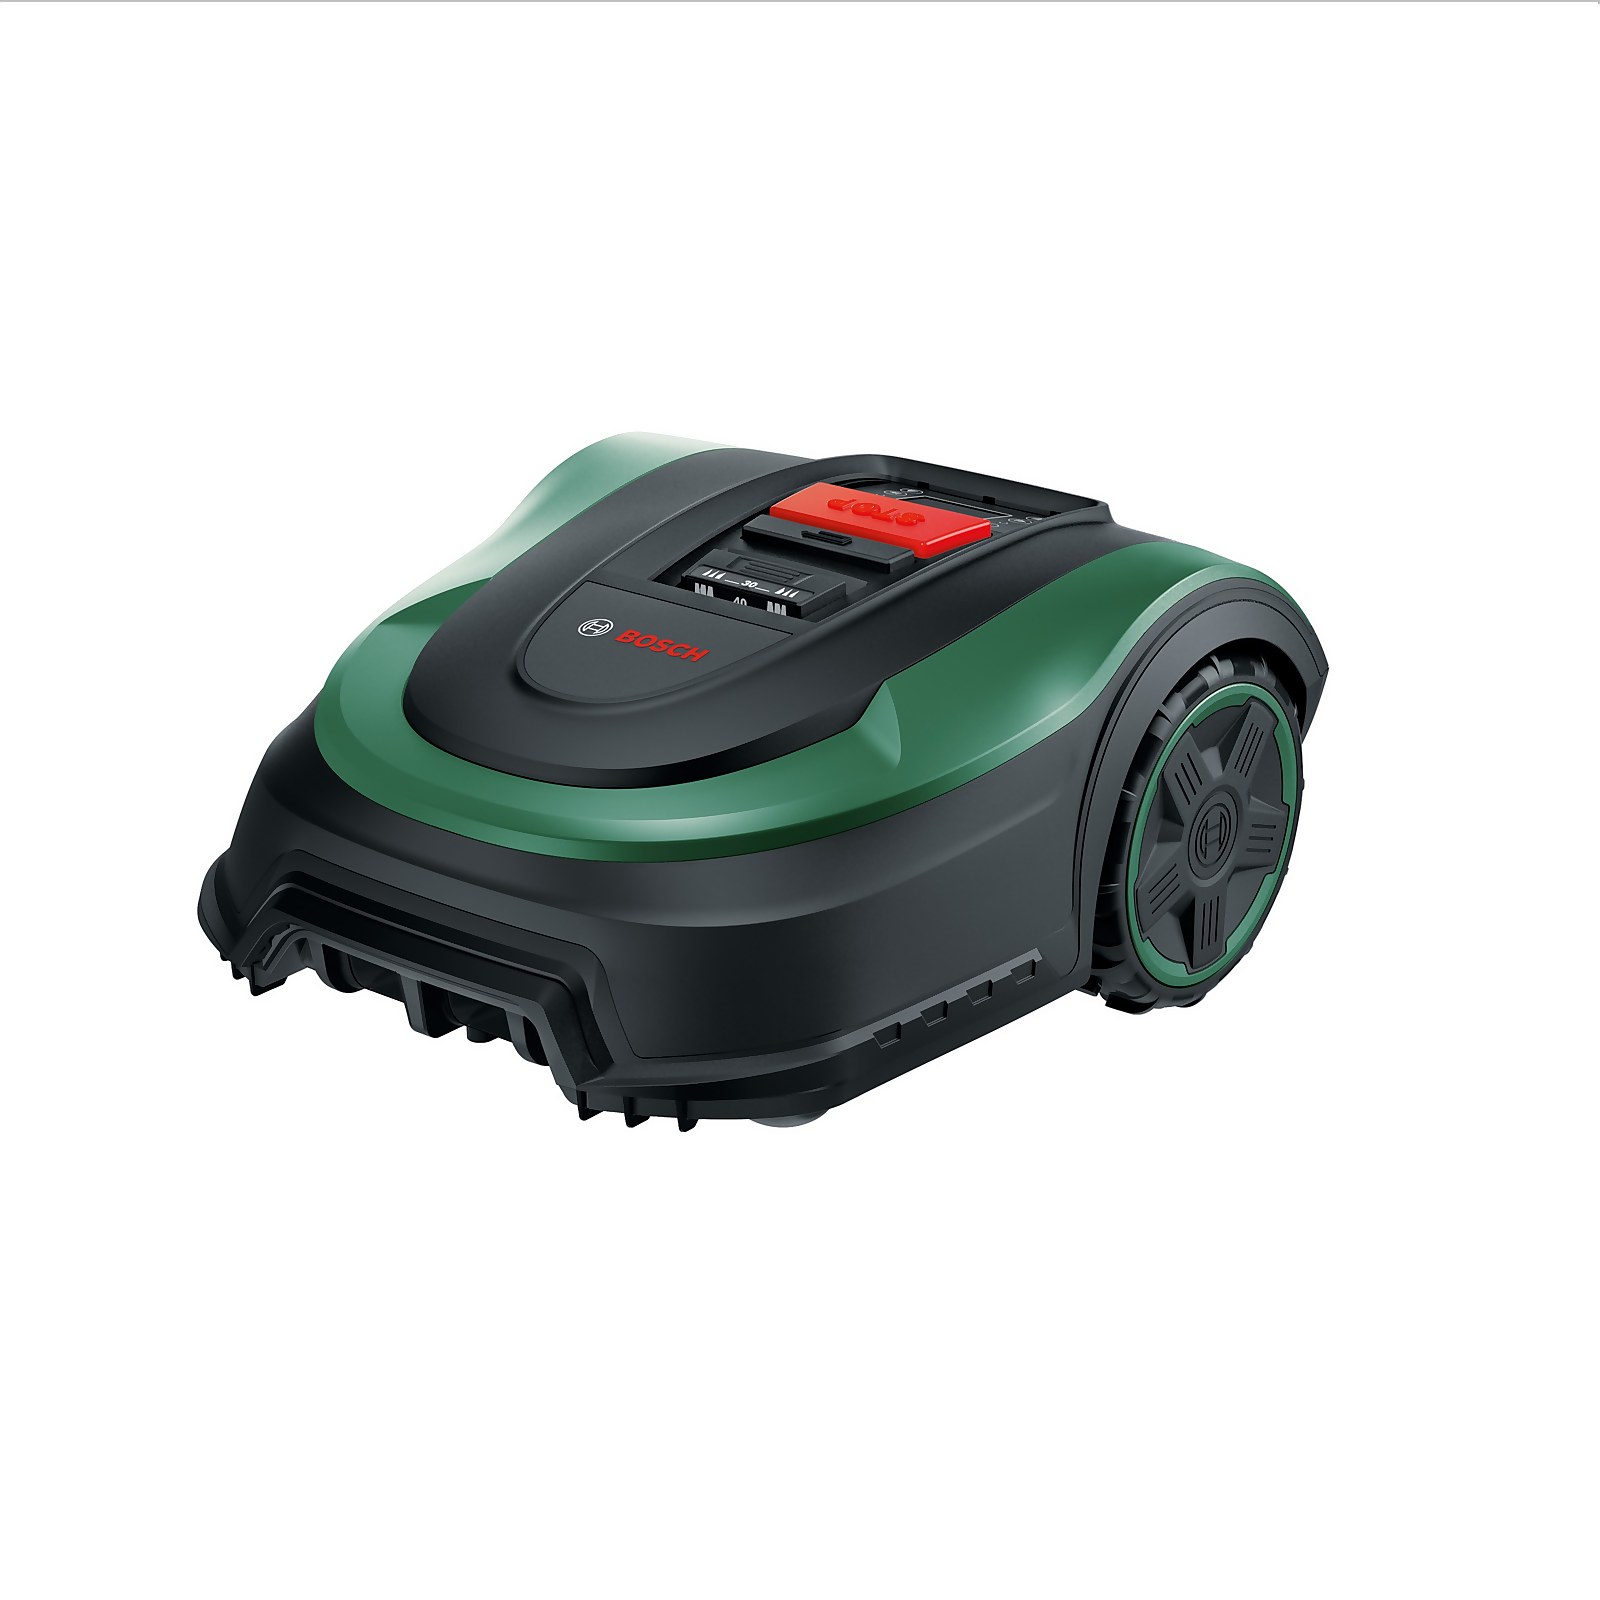 Bosch Indego S Plus 500 Robotic Lawn Mower